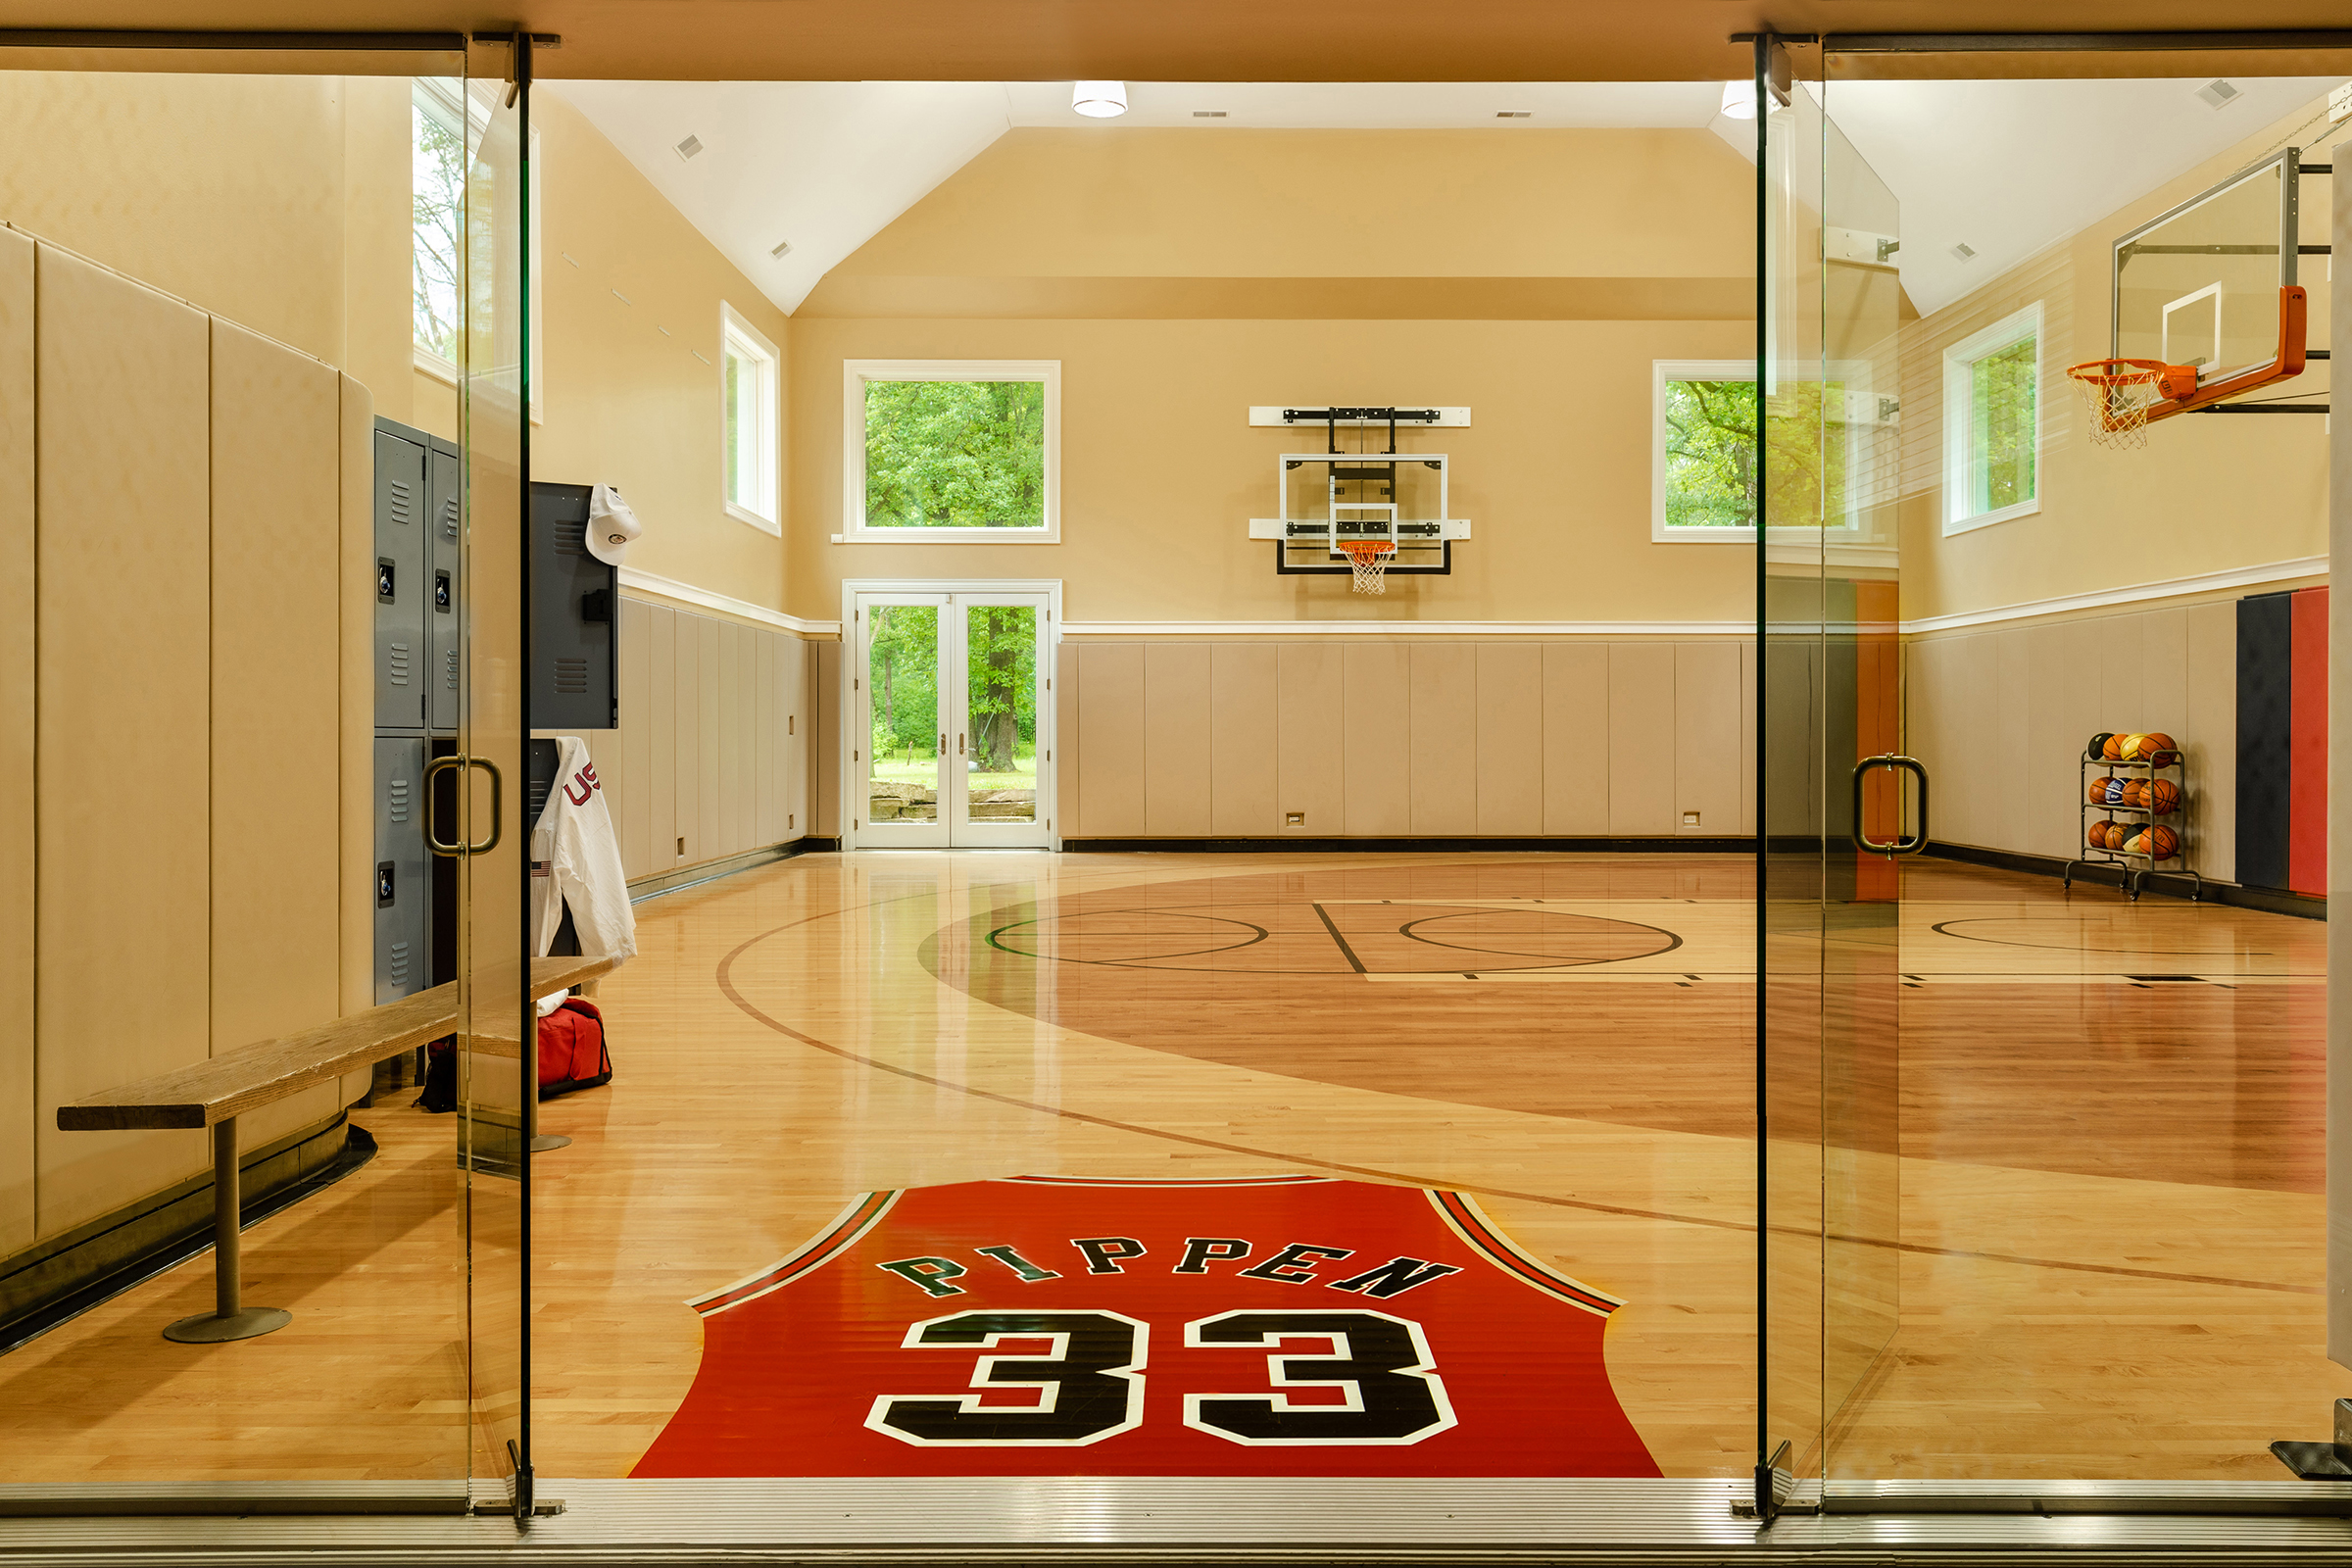 View through the entrance doors of Scottie's indoor basketball court.